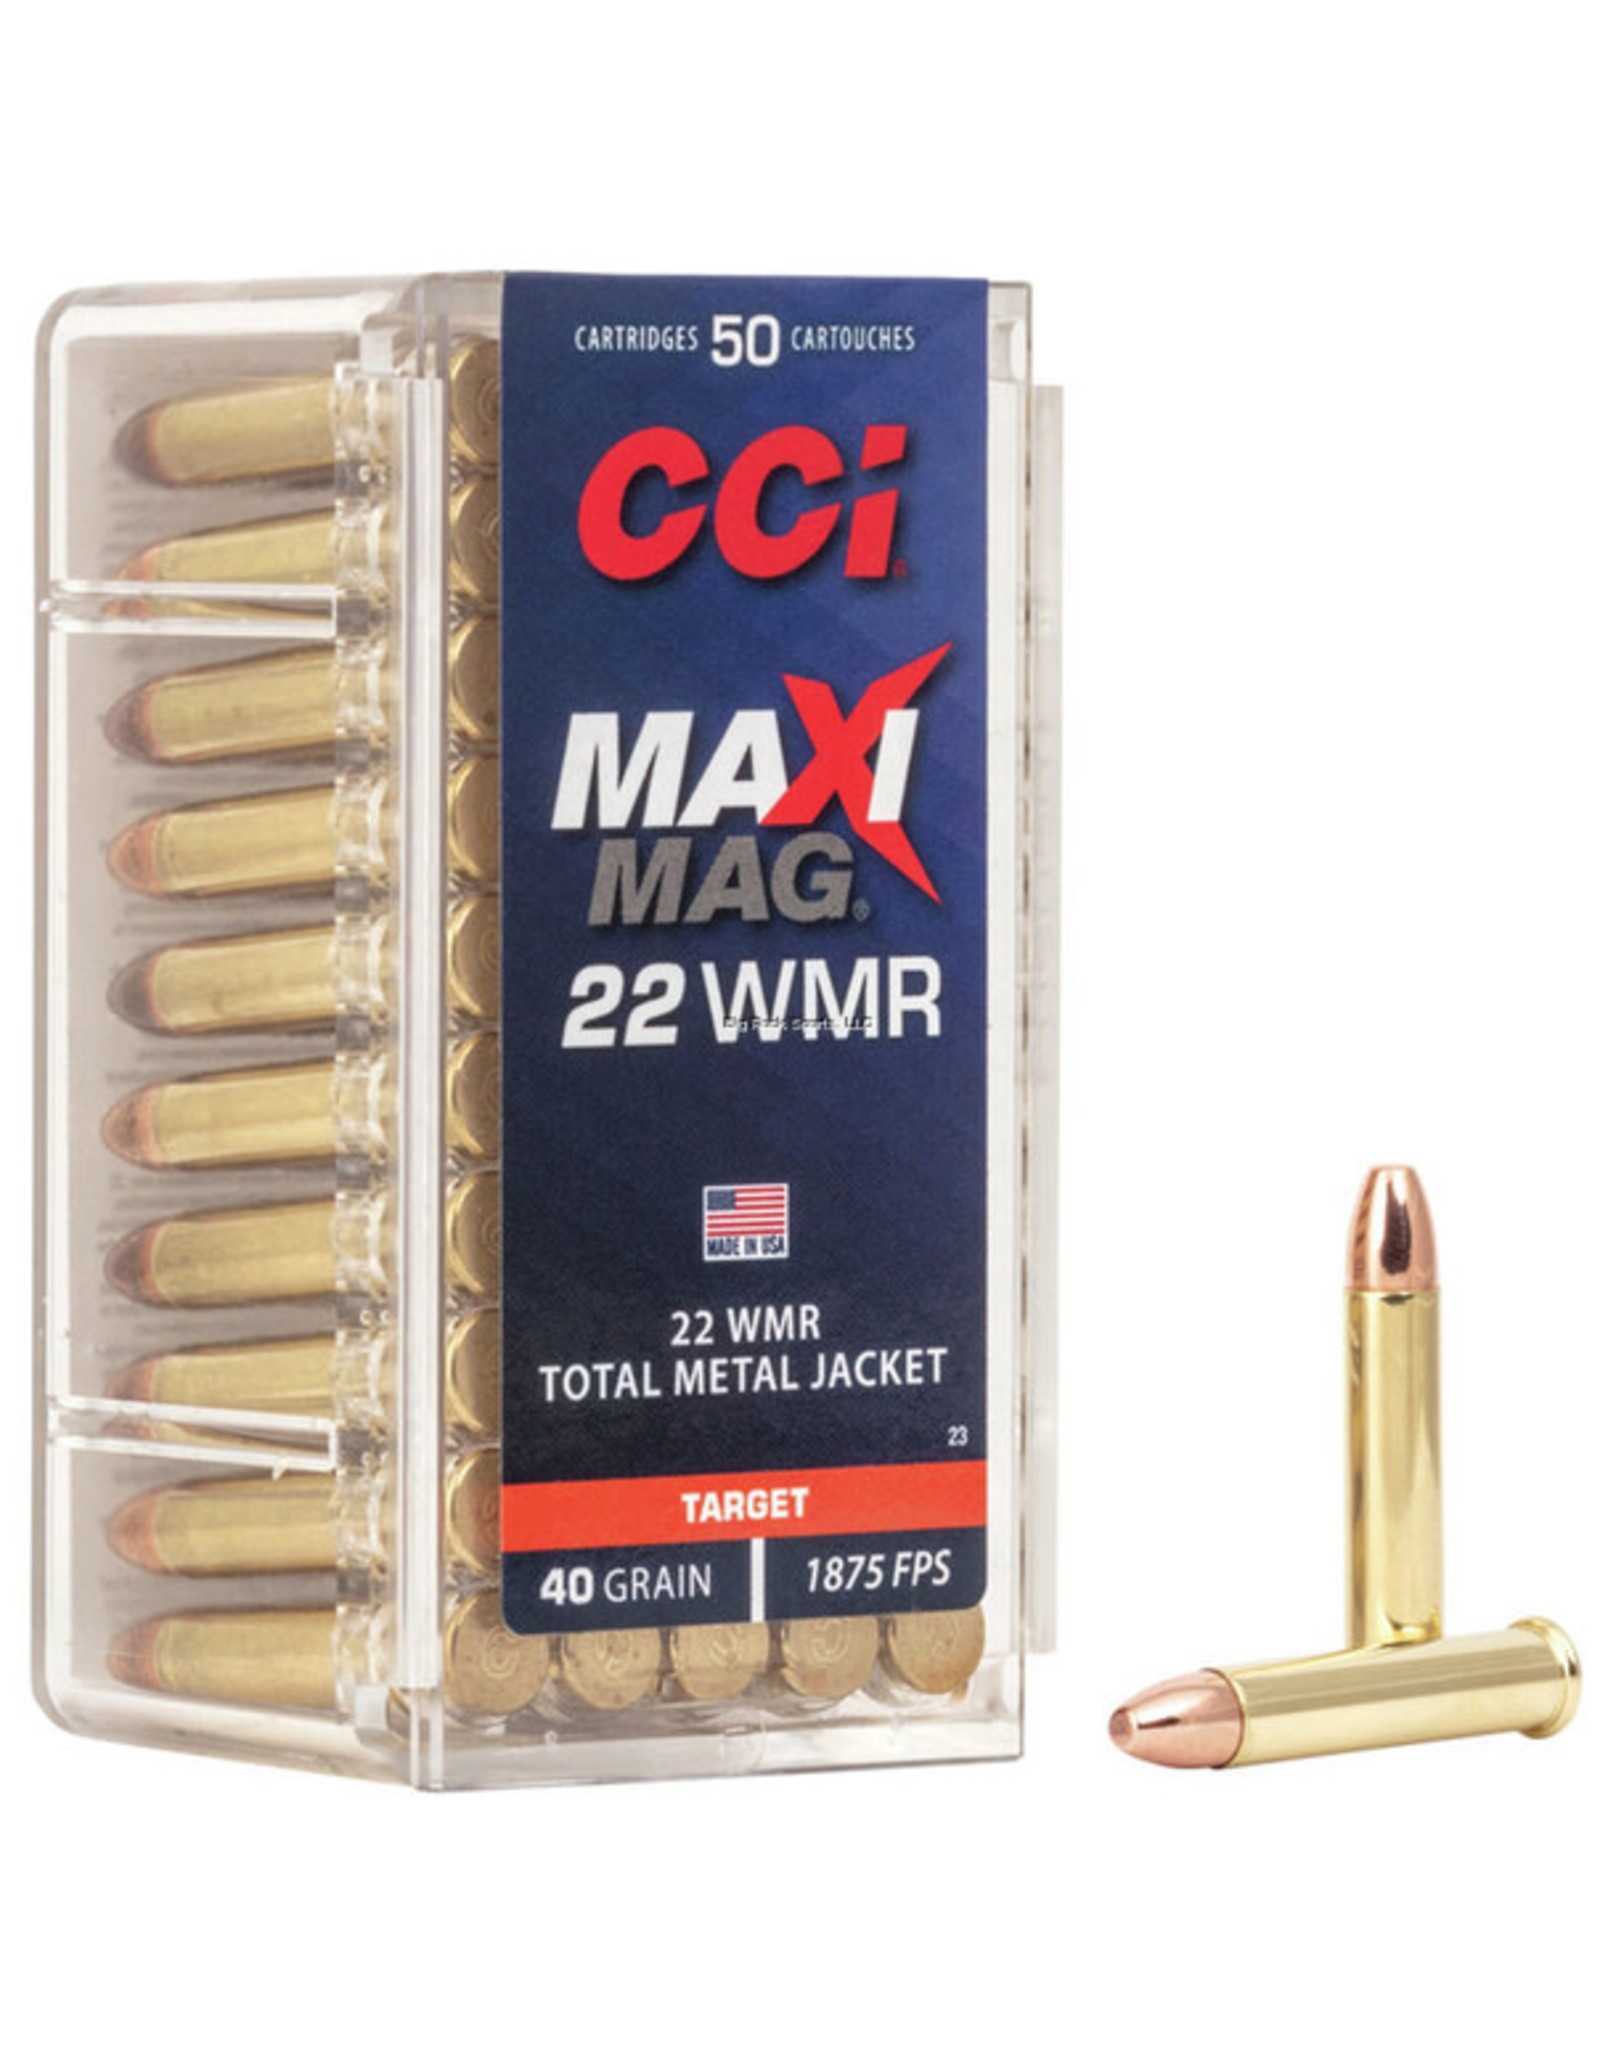 CCI CCI Maxi Mag Rimfire Rifle Ammo 22 WIN MAG, TMJ, 40 Grains, 1875 fps, 50 Rounds, Boxed